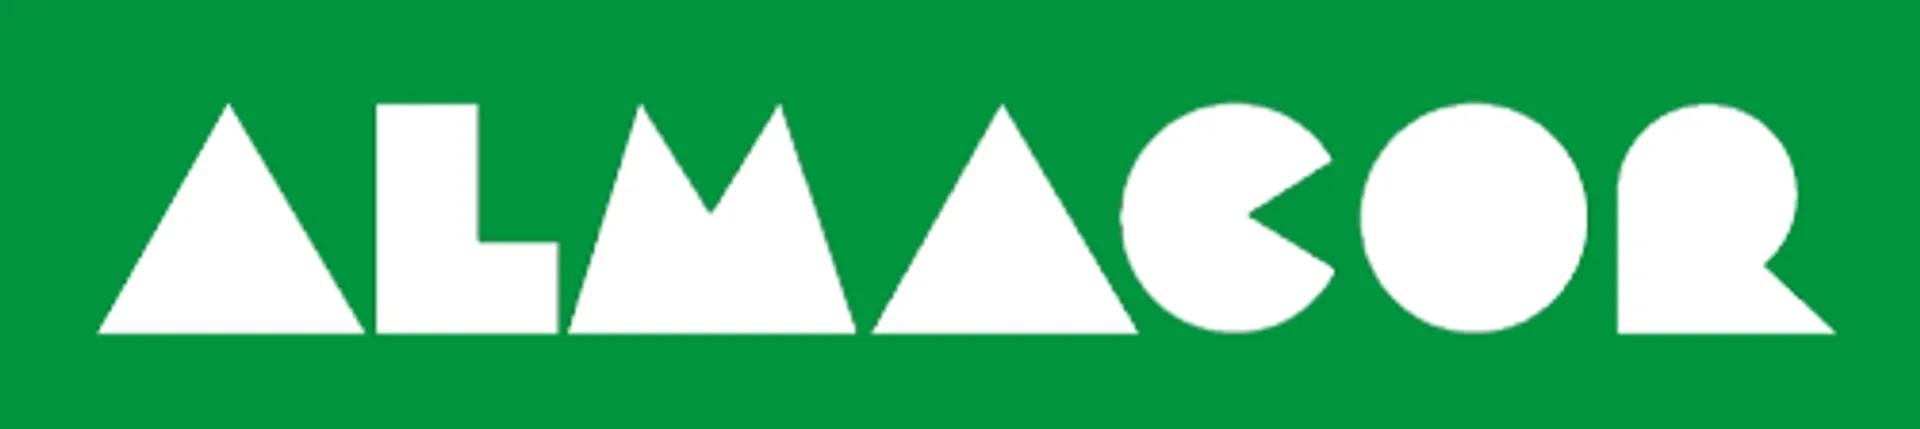 ALMACOR logo